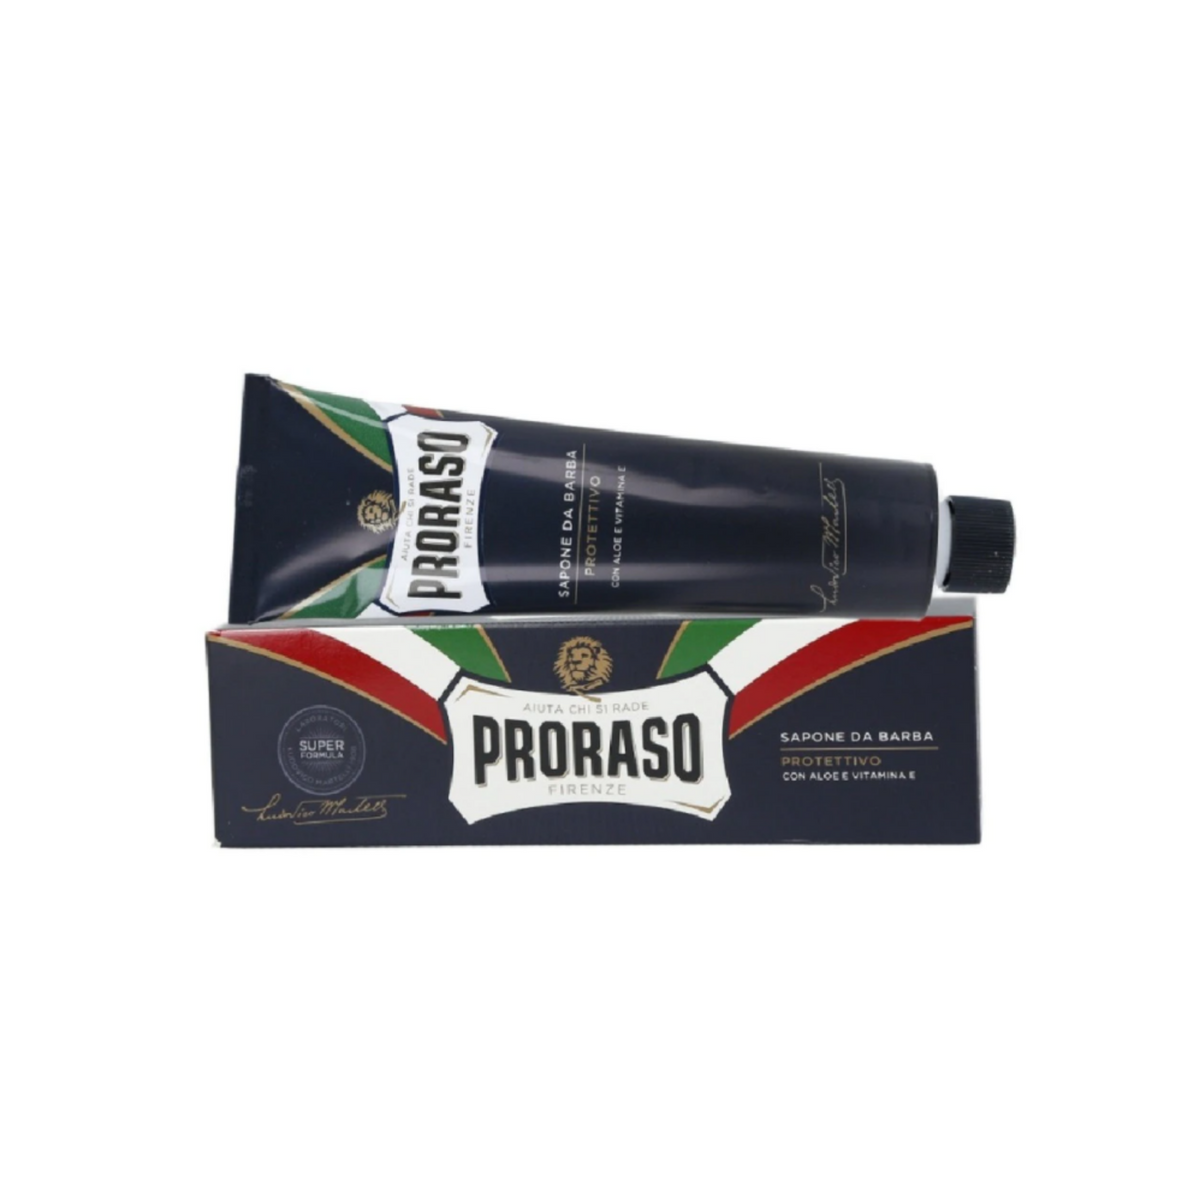 Primary image of Proraso Shave Cream